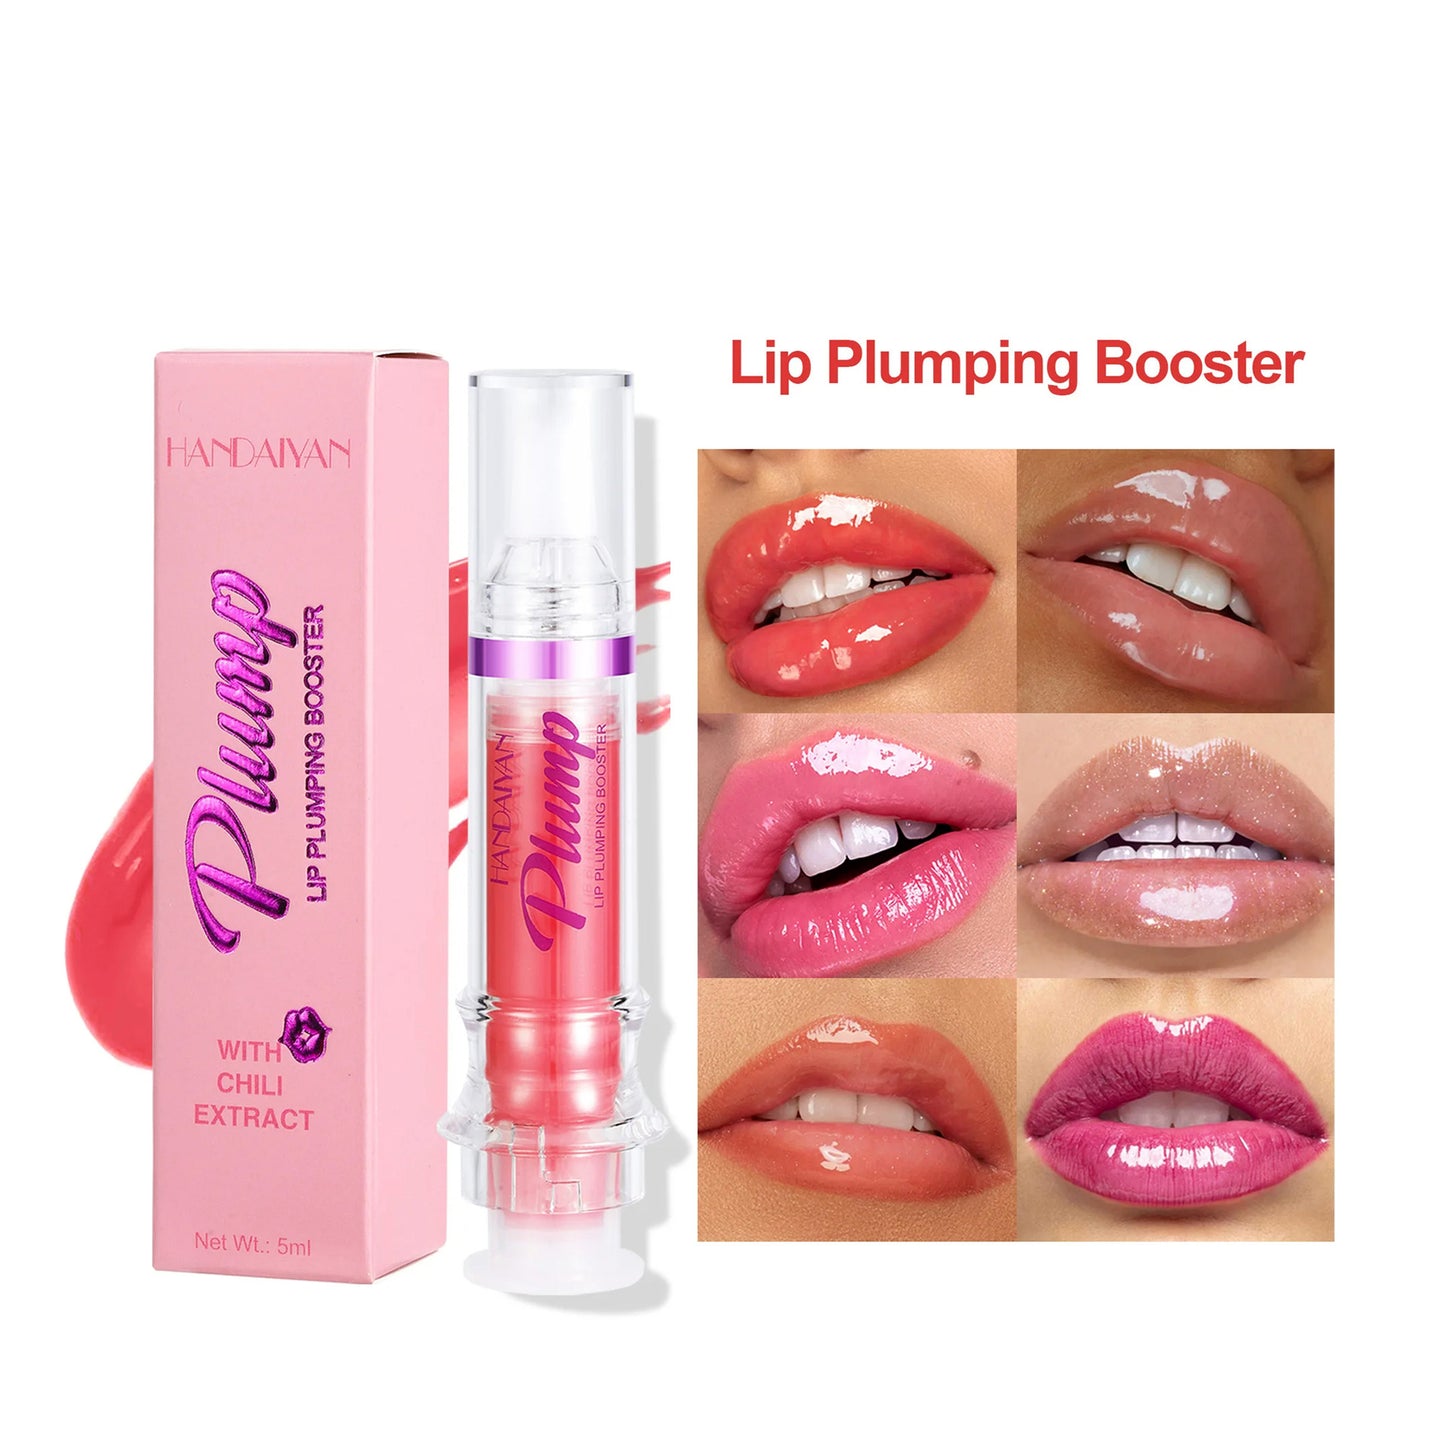 Neue Tube Lip Rich Lip Color Leicht würziger Lip Honey Lip Glass Mirror Face Lip Mirror Liquid Lipstick